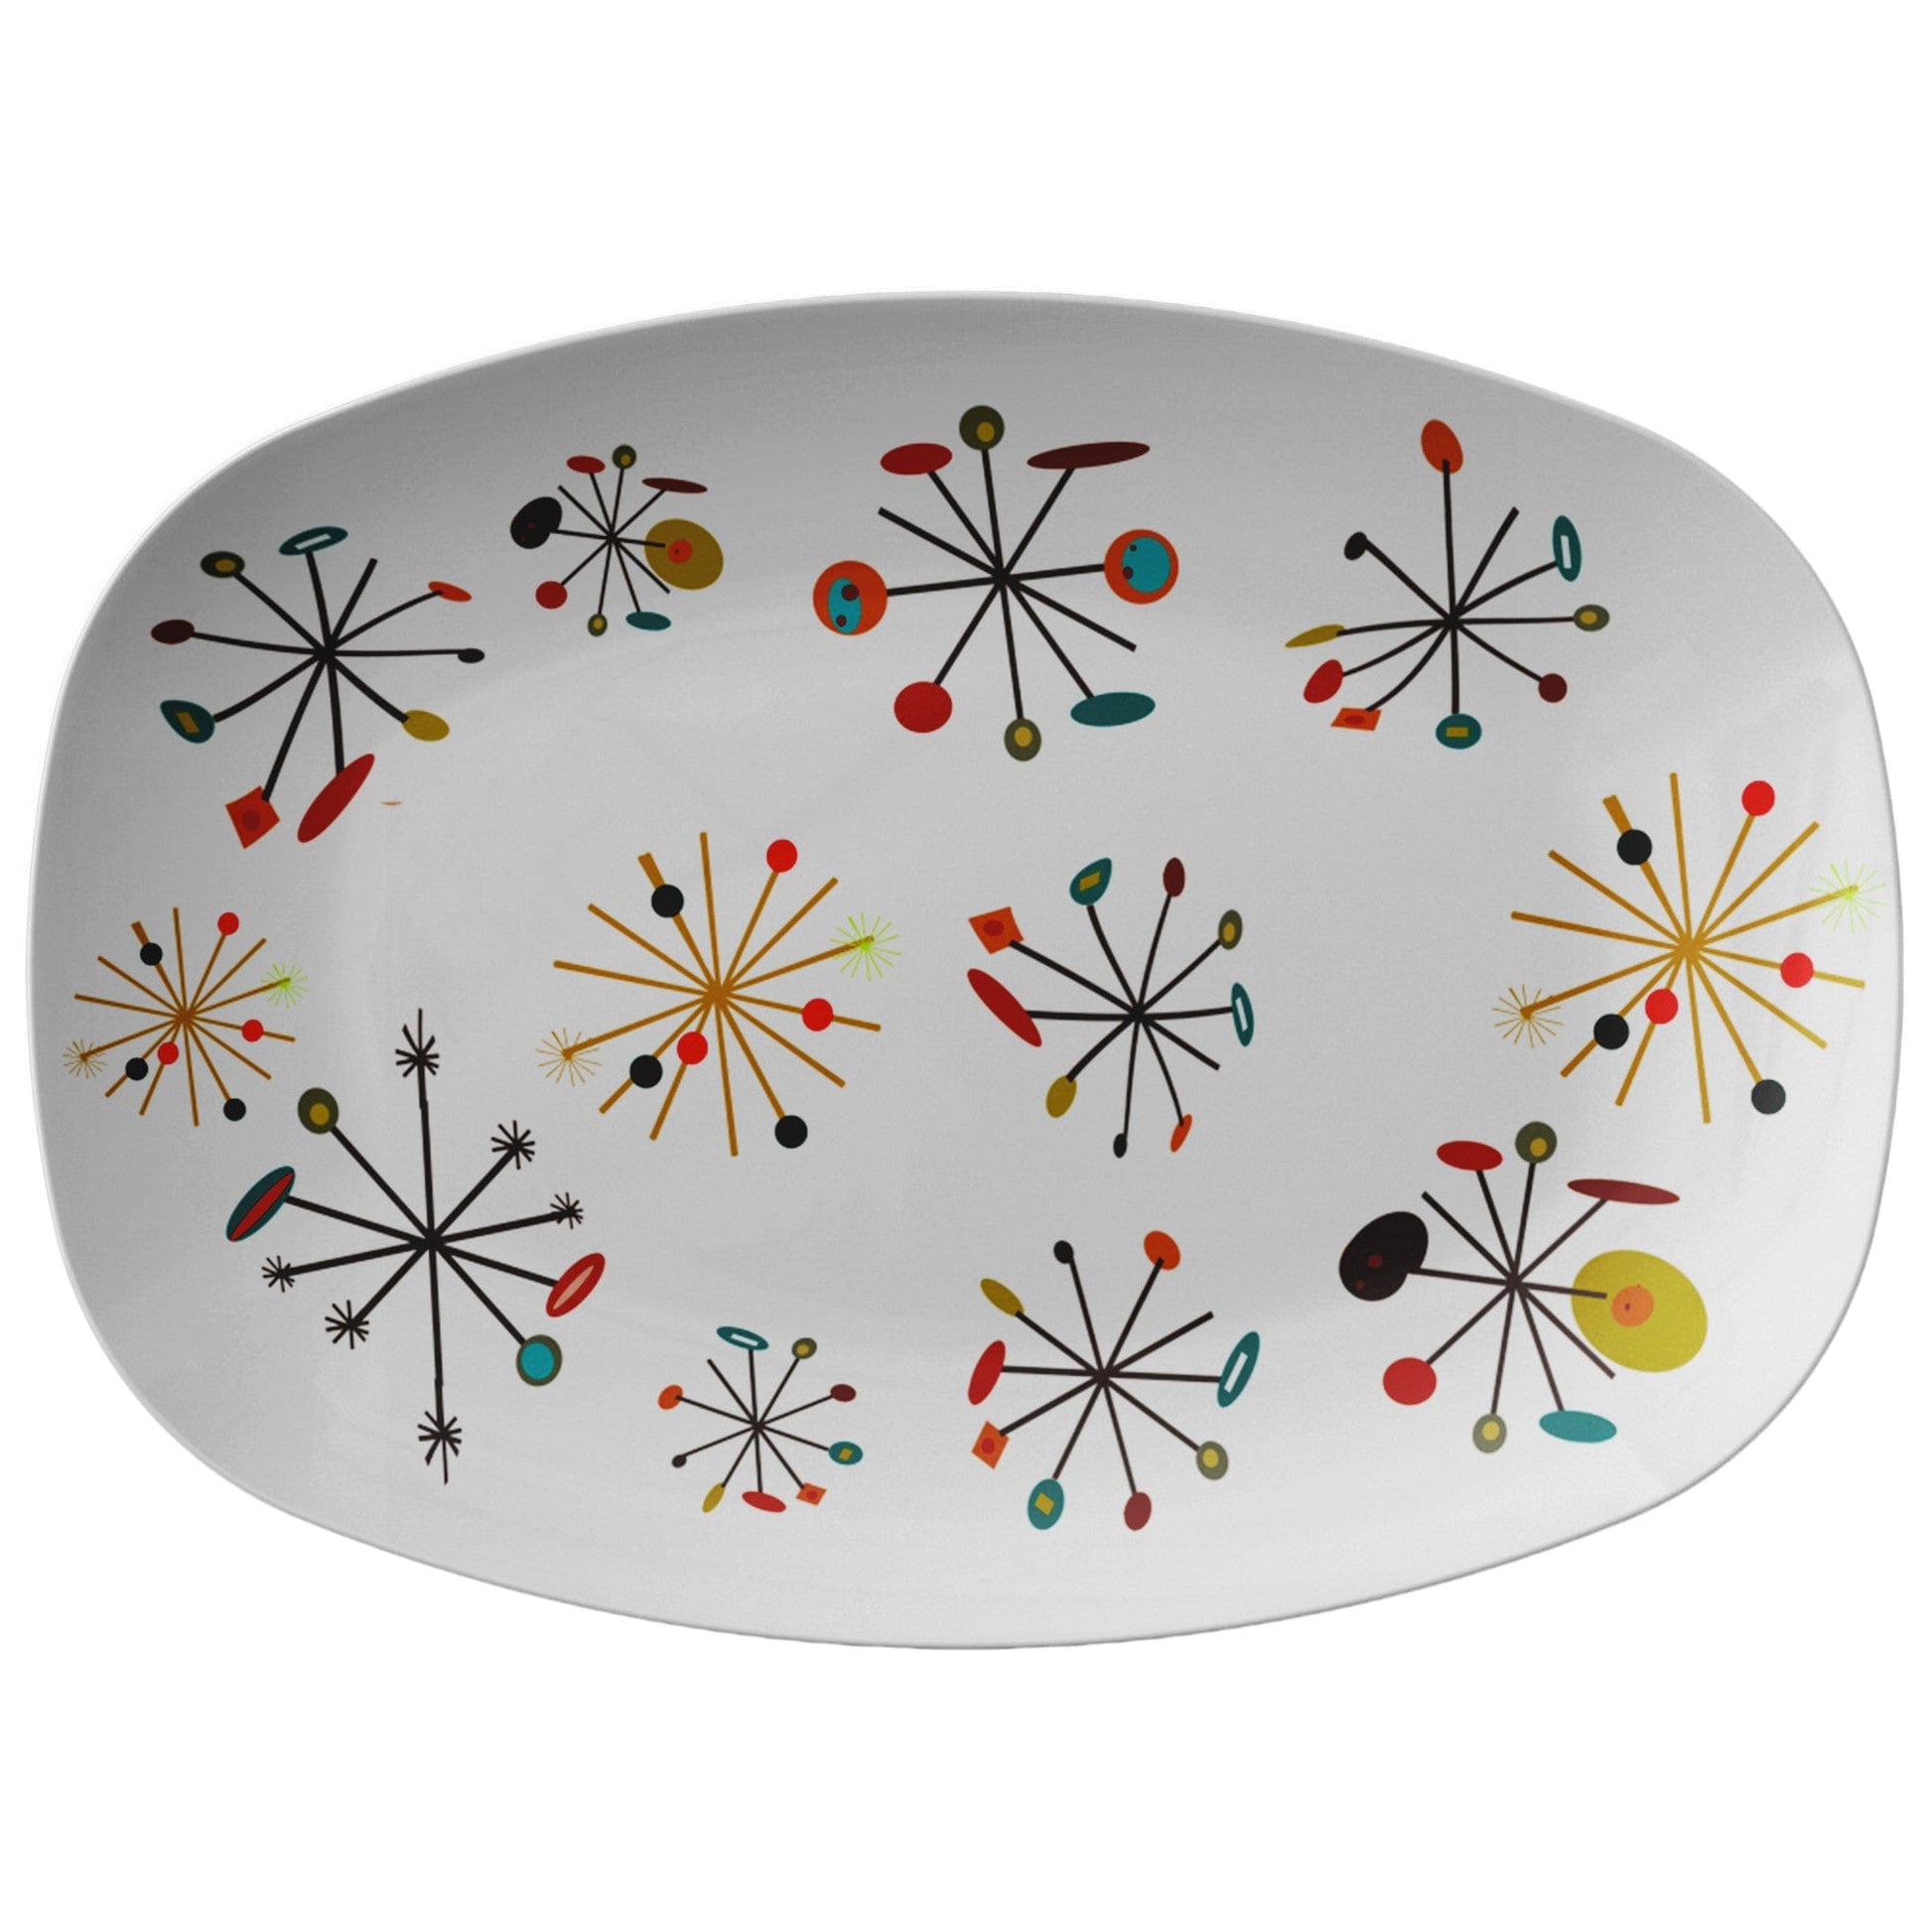 teelaunch Mid Century Modern Atomic Starburst Platter, 1950s Inspired Design, Retro Vintage Serving Dish, Collectible Home Decor Kitchenware 9727